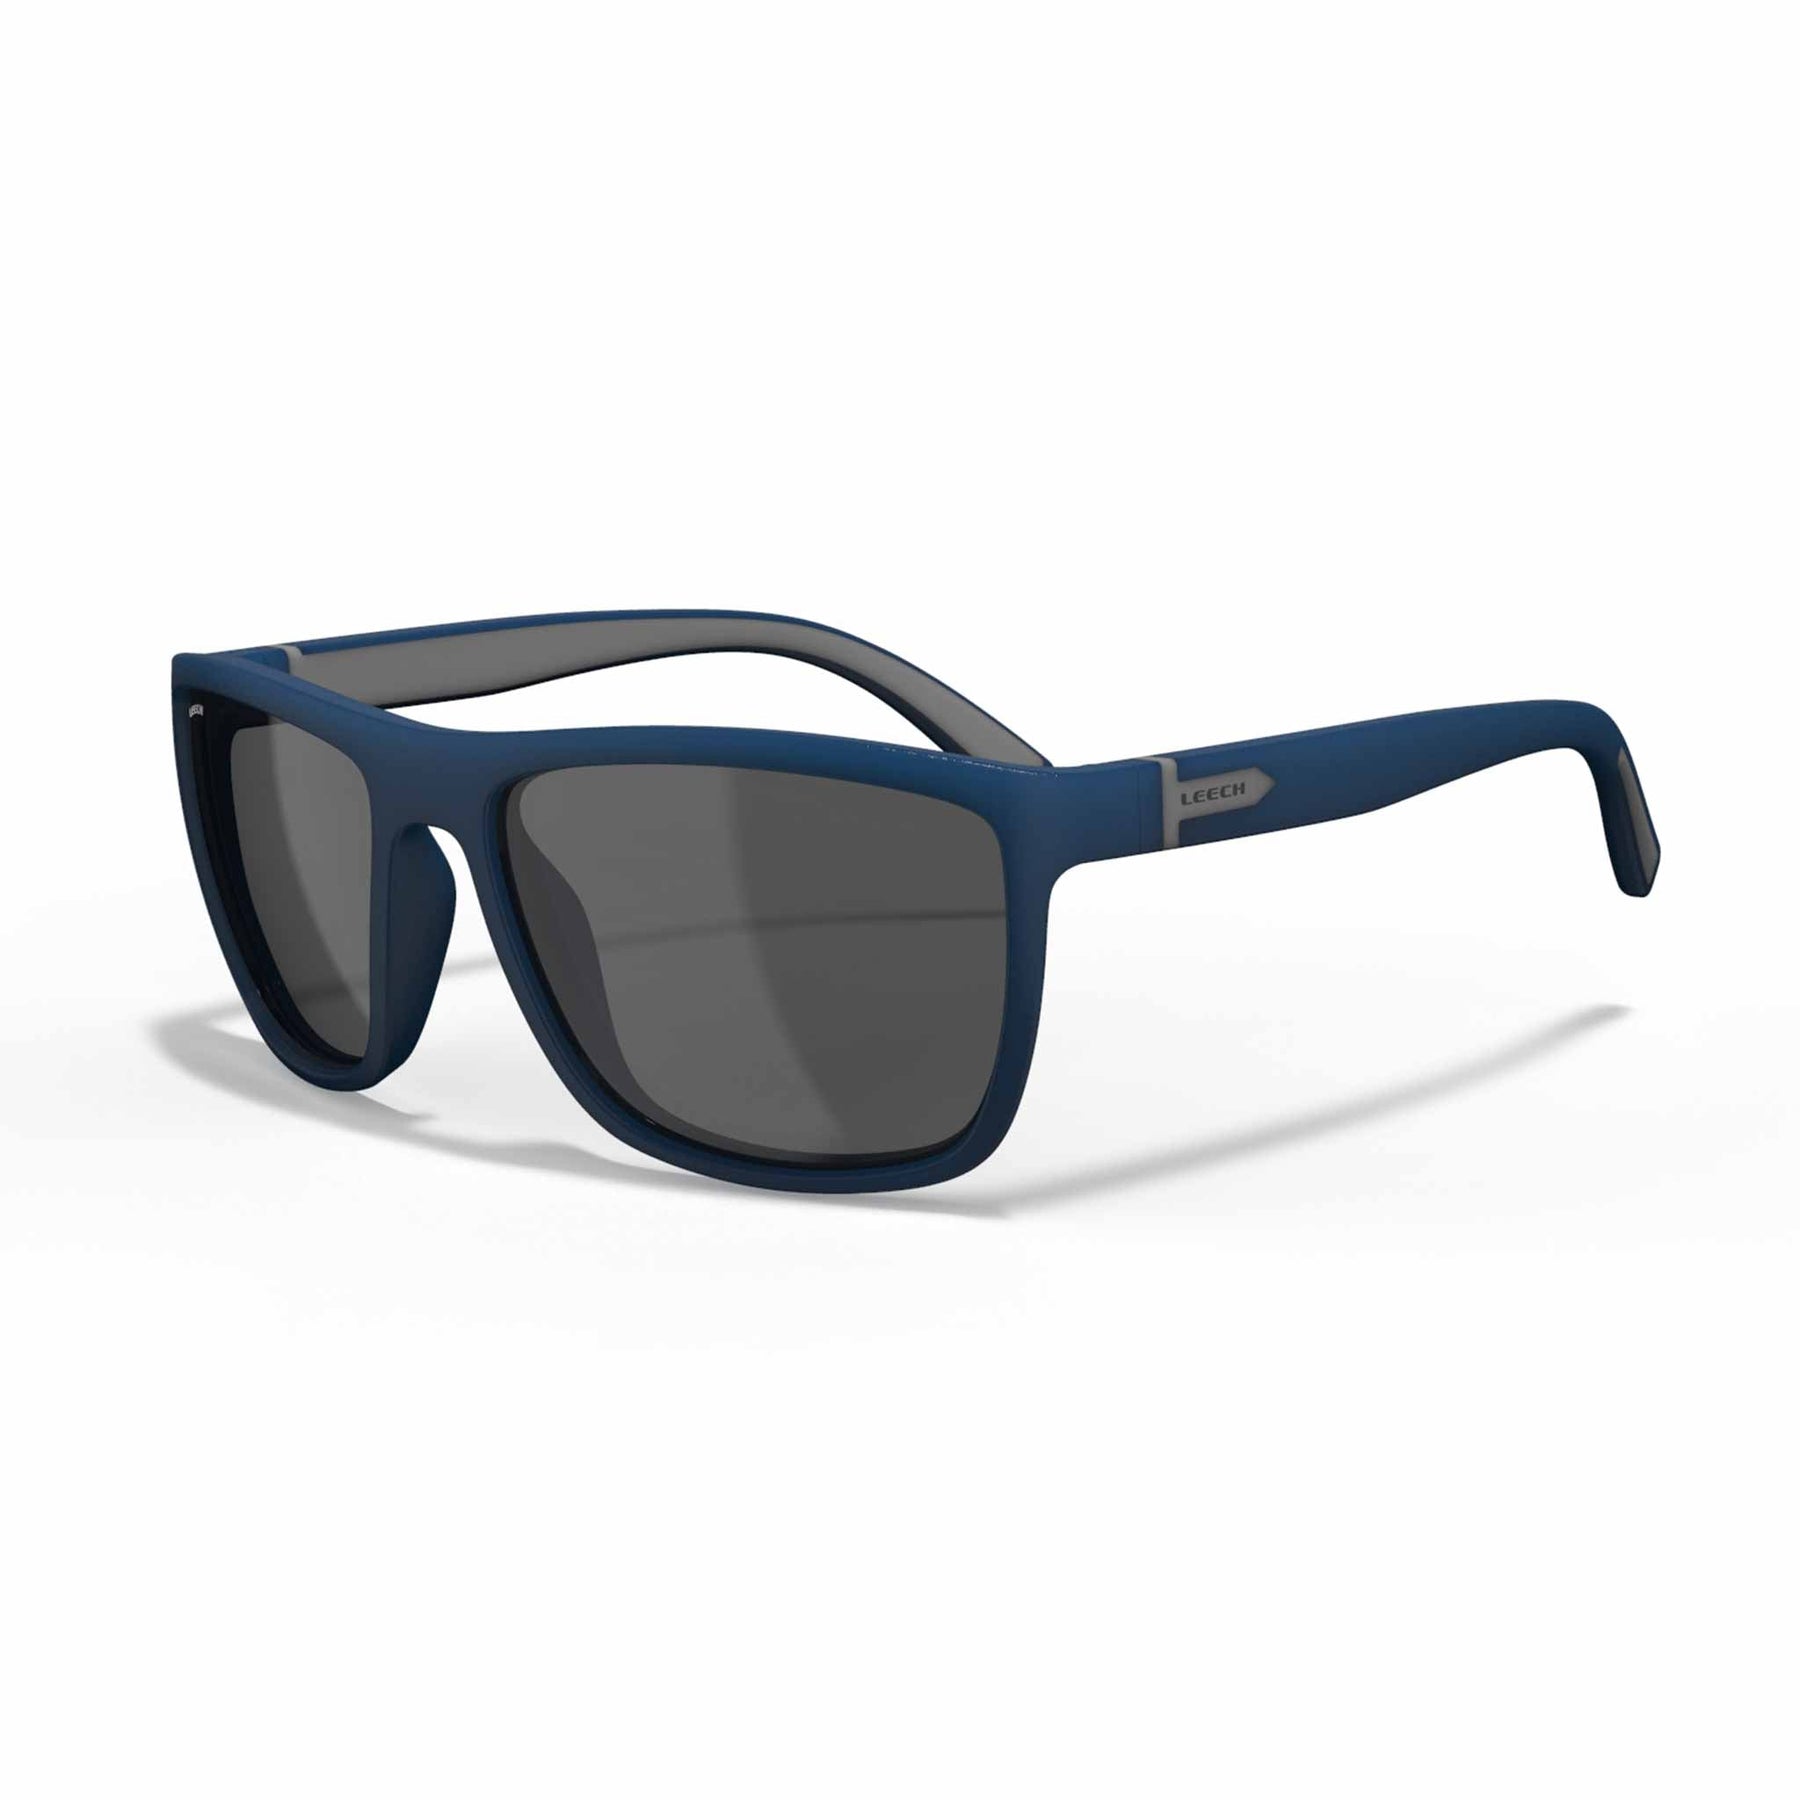 Leech Eyewear ATW6 ATW6 BLUE Sunglasses